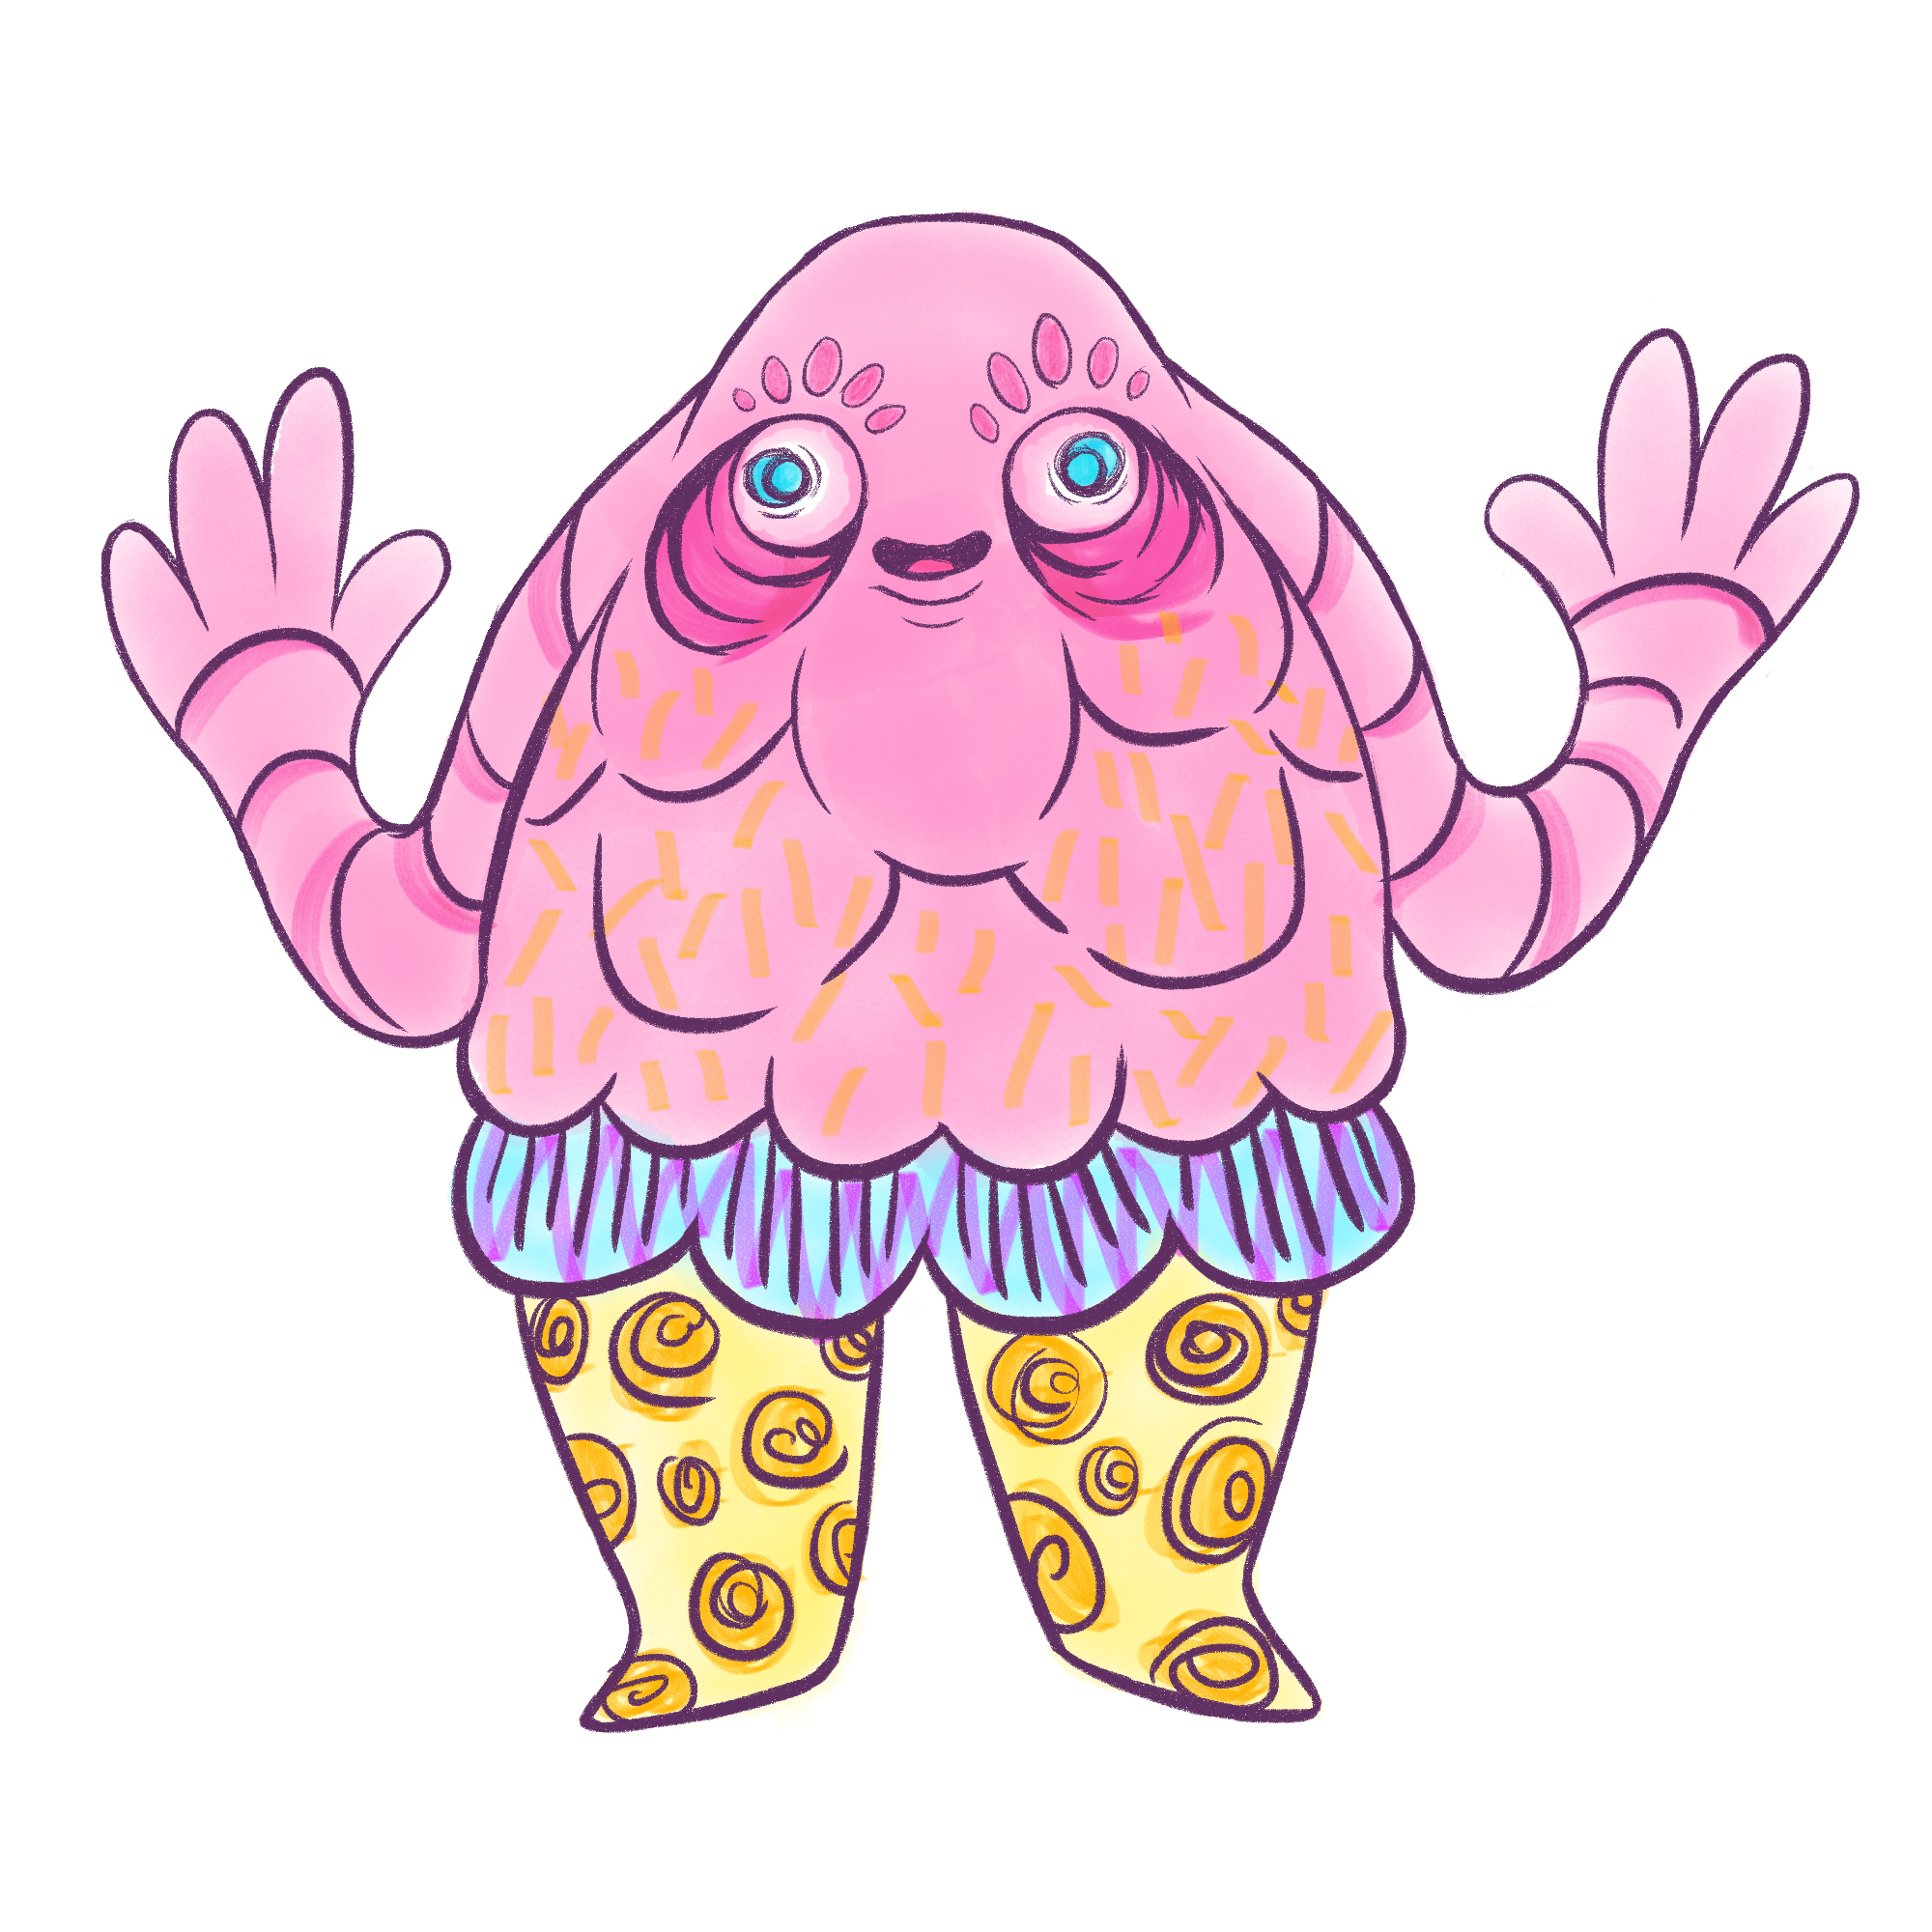 2D Pink Monster Character Illustration